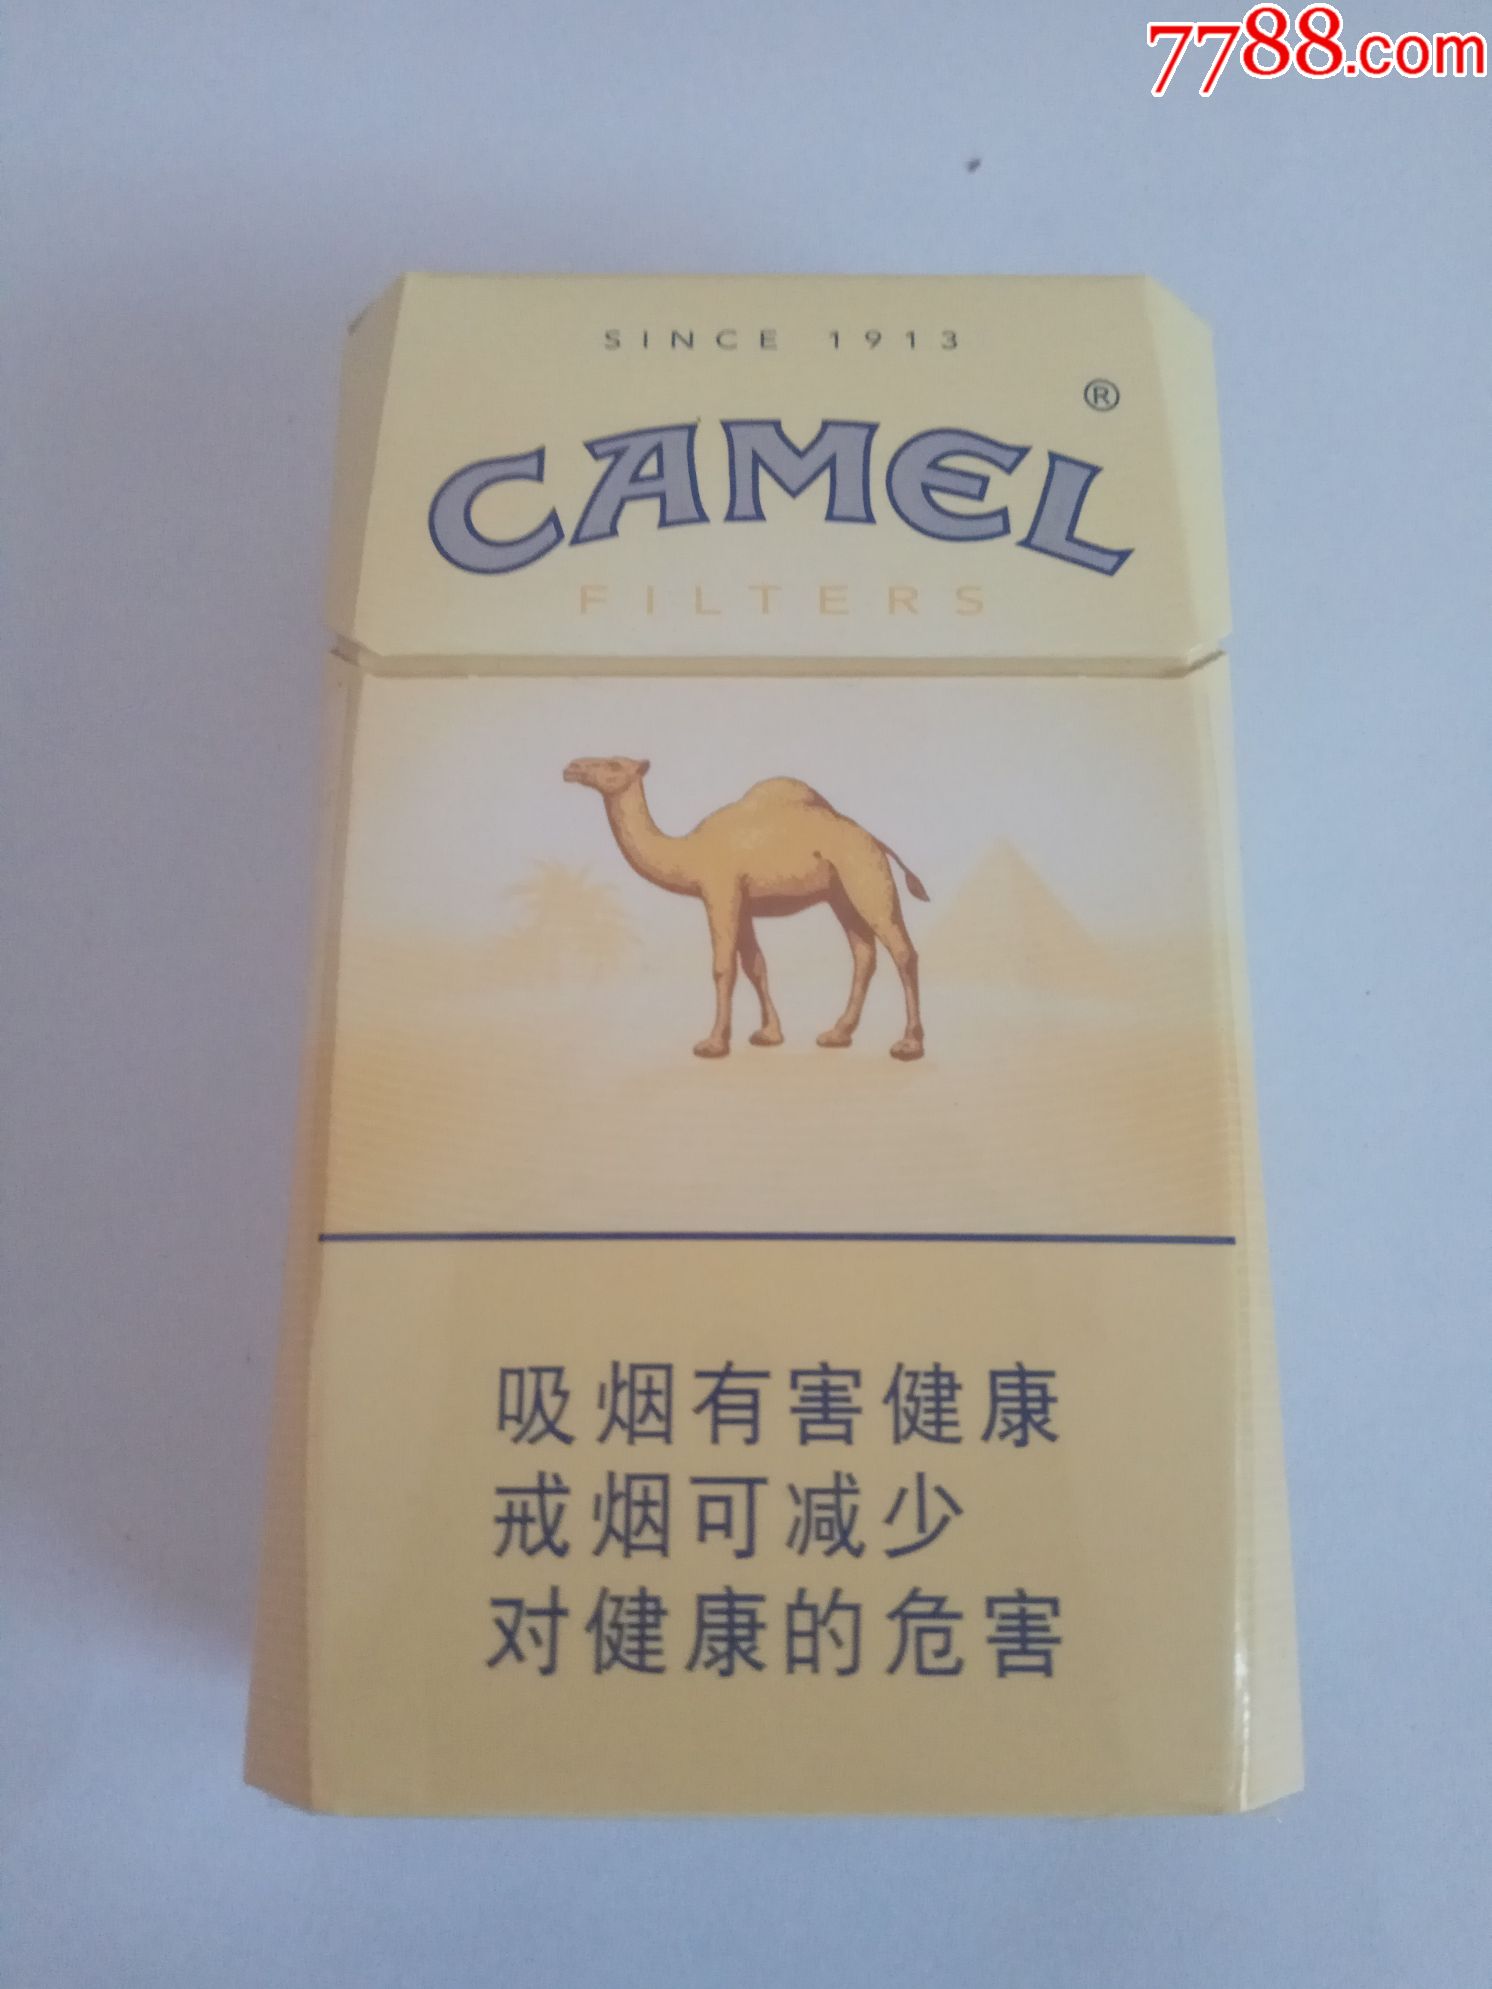 骆驼烟图片